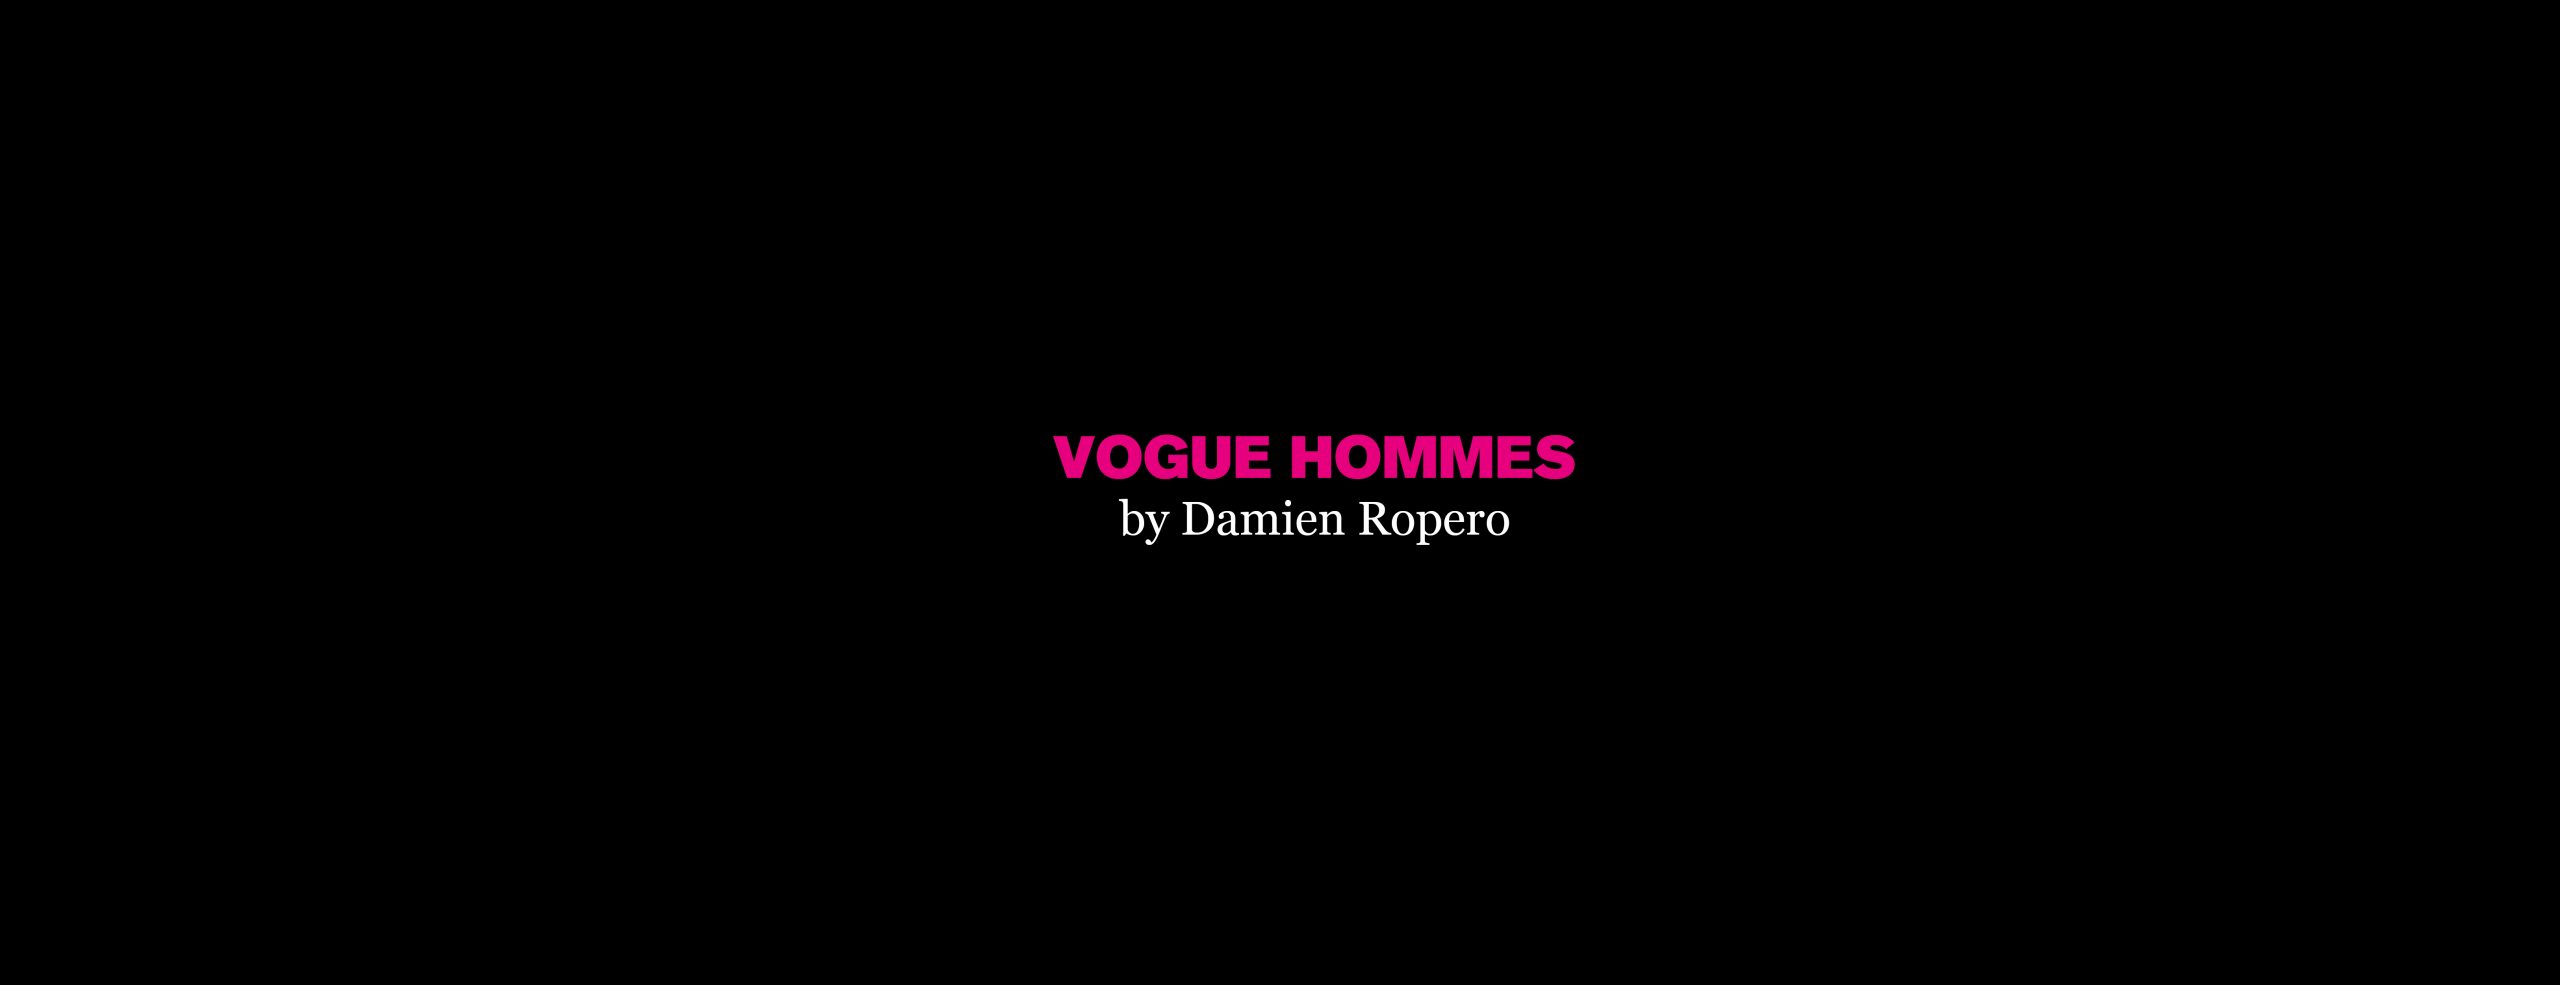 Vogue Hommes by Damien Ropero